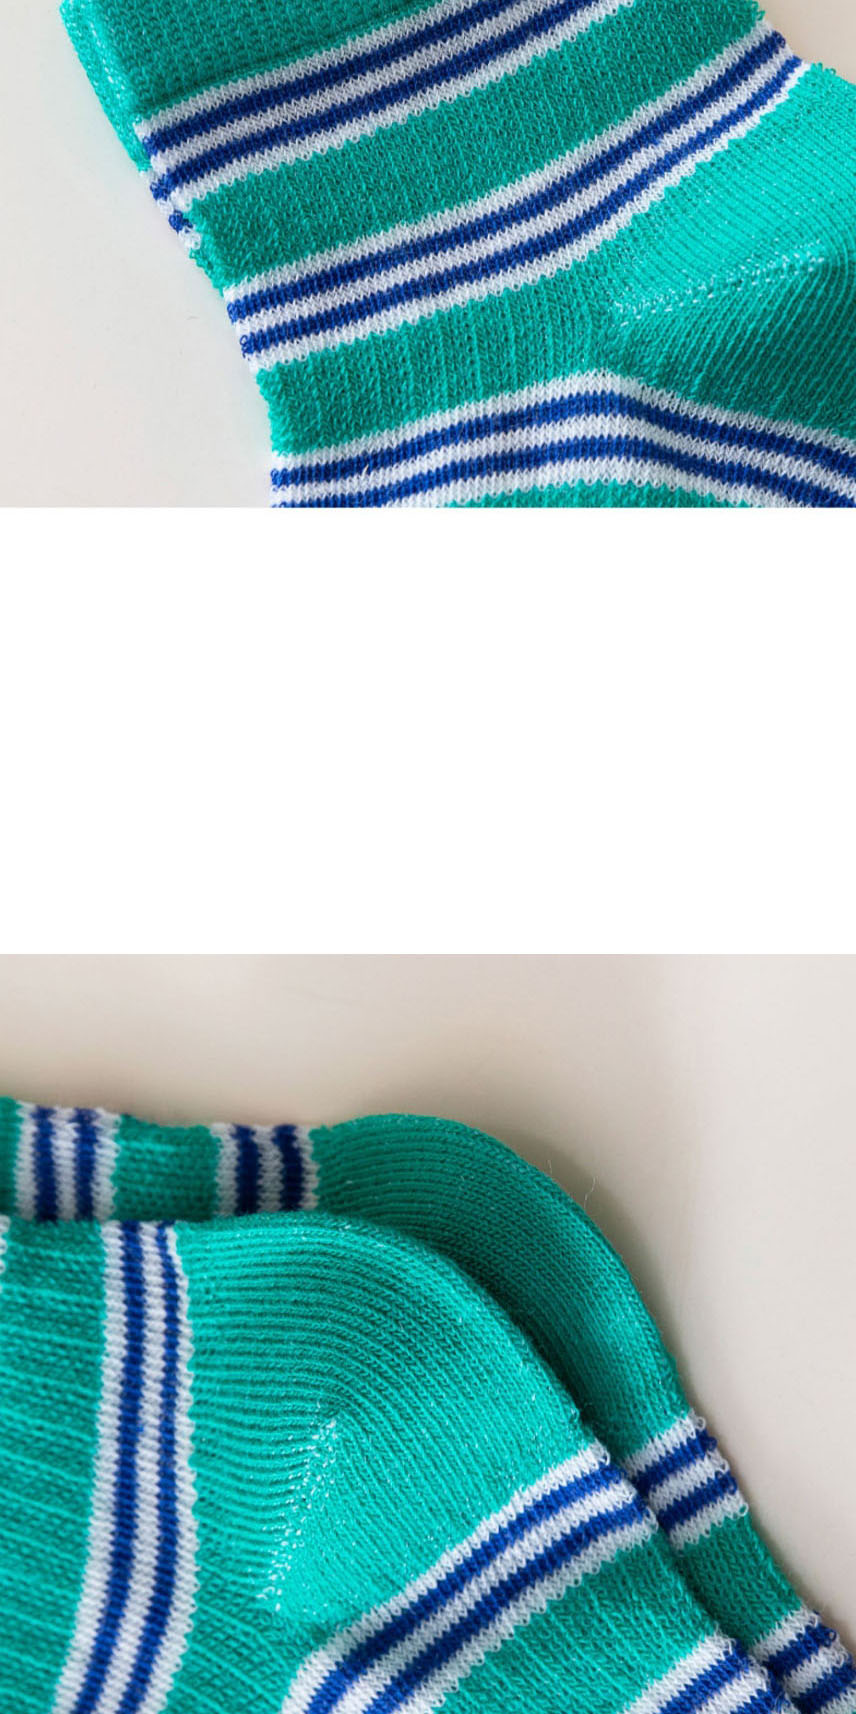 Fashion Summer Smiling Face [5 Pairs Of Breathable Mesh] Cotton Printed Breathable Mesh Kids Socks,Fashion Socks